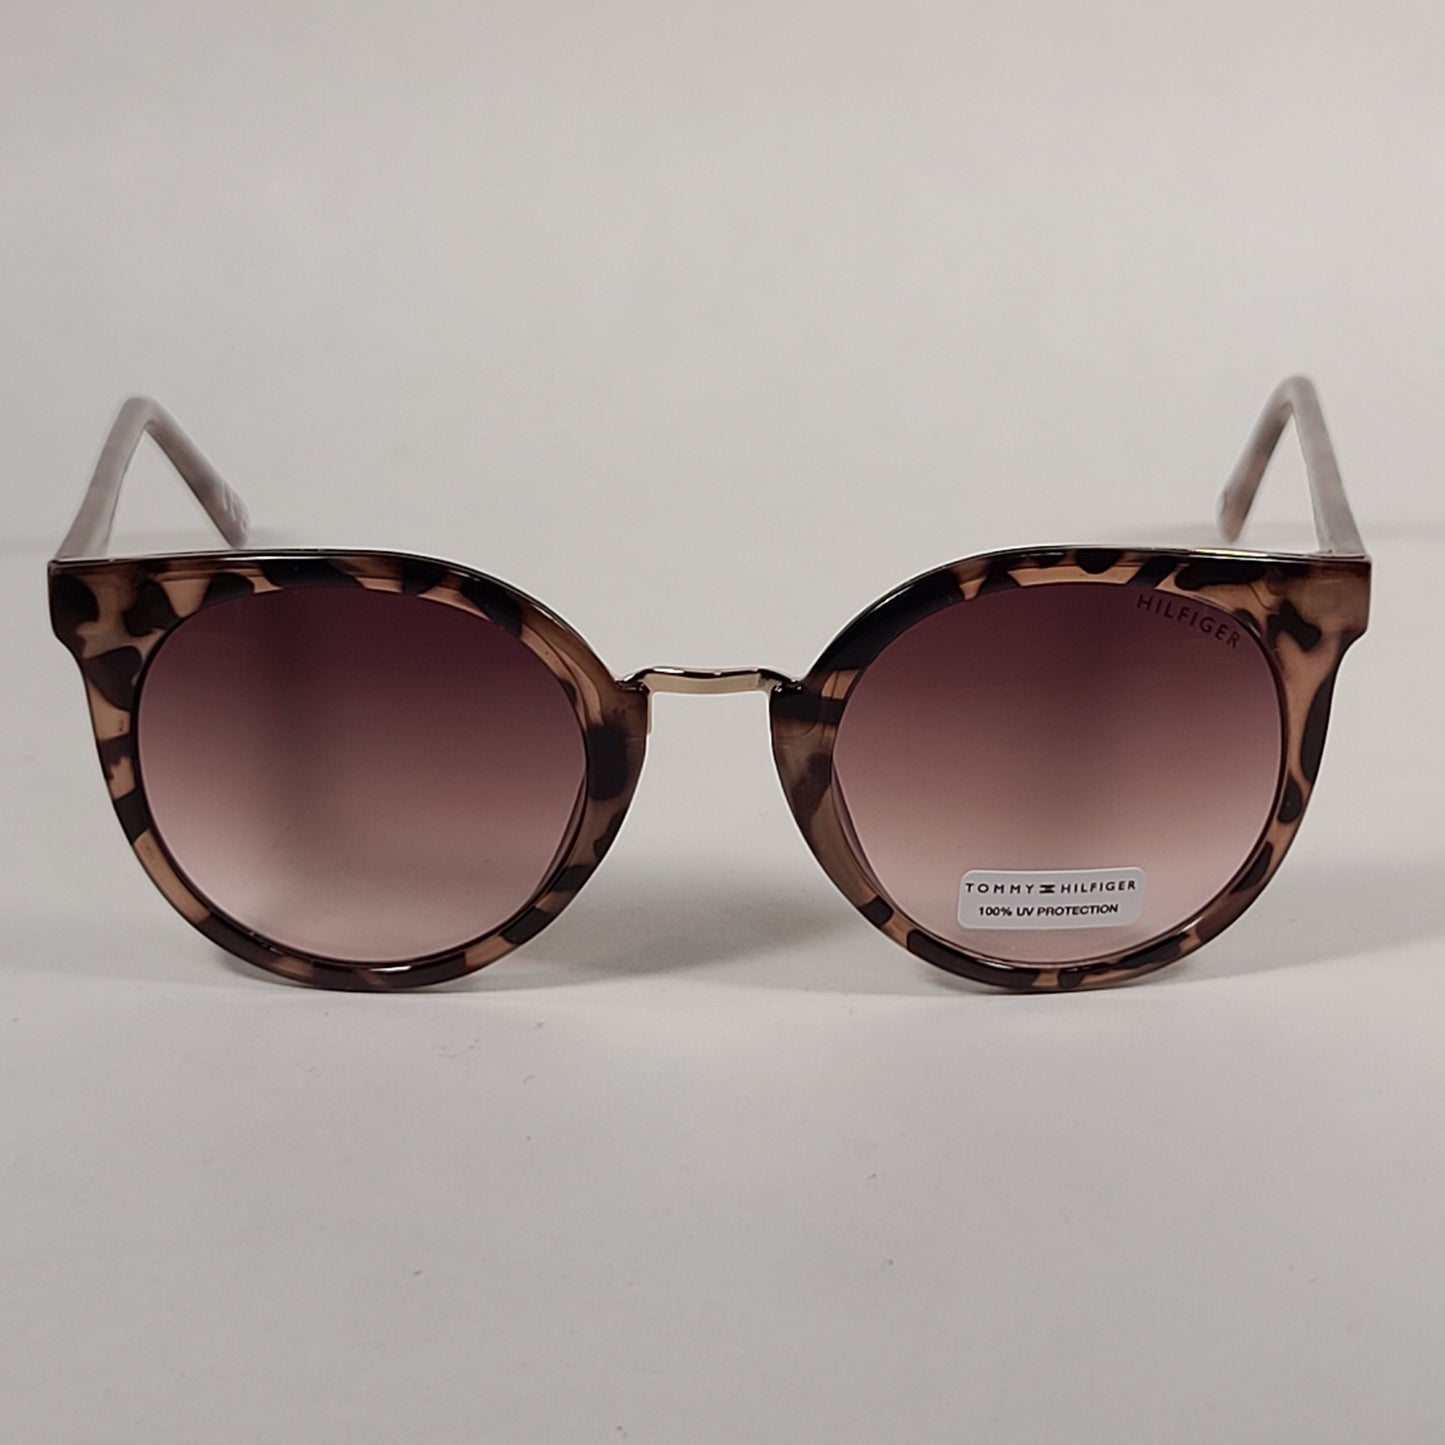 Tommy Hilfiger Hope Round Sunglasses Milk Tortoise Brown Gradient Lens HOPE WP OL511 - Sunglasses